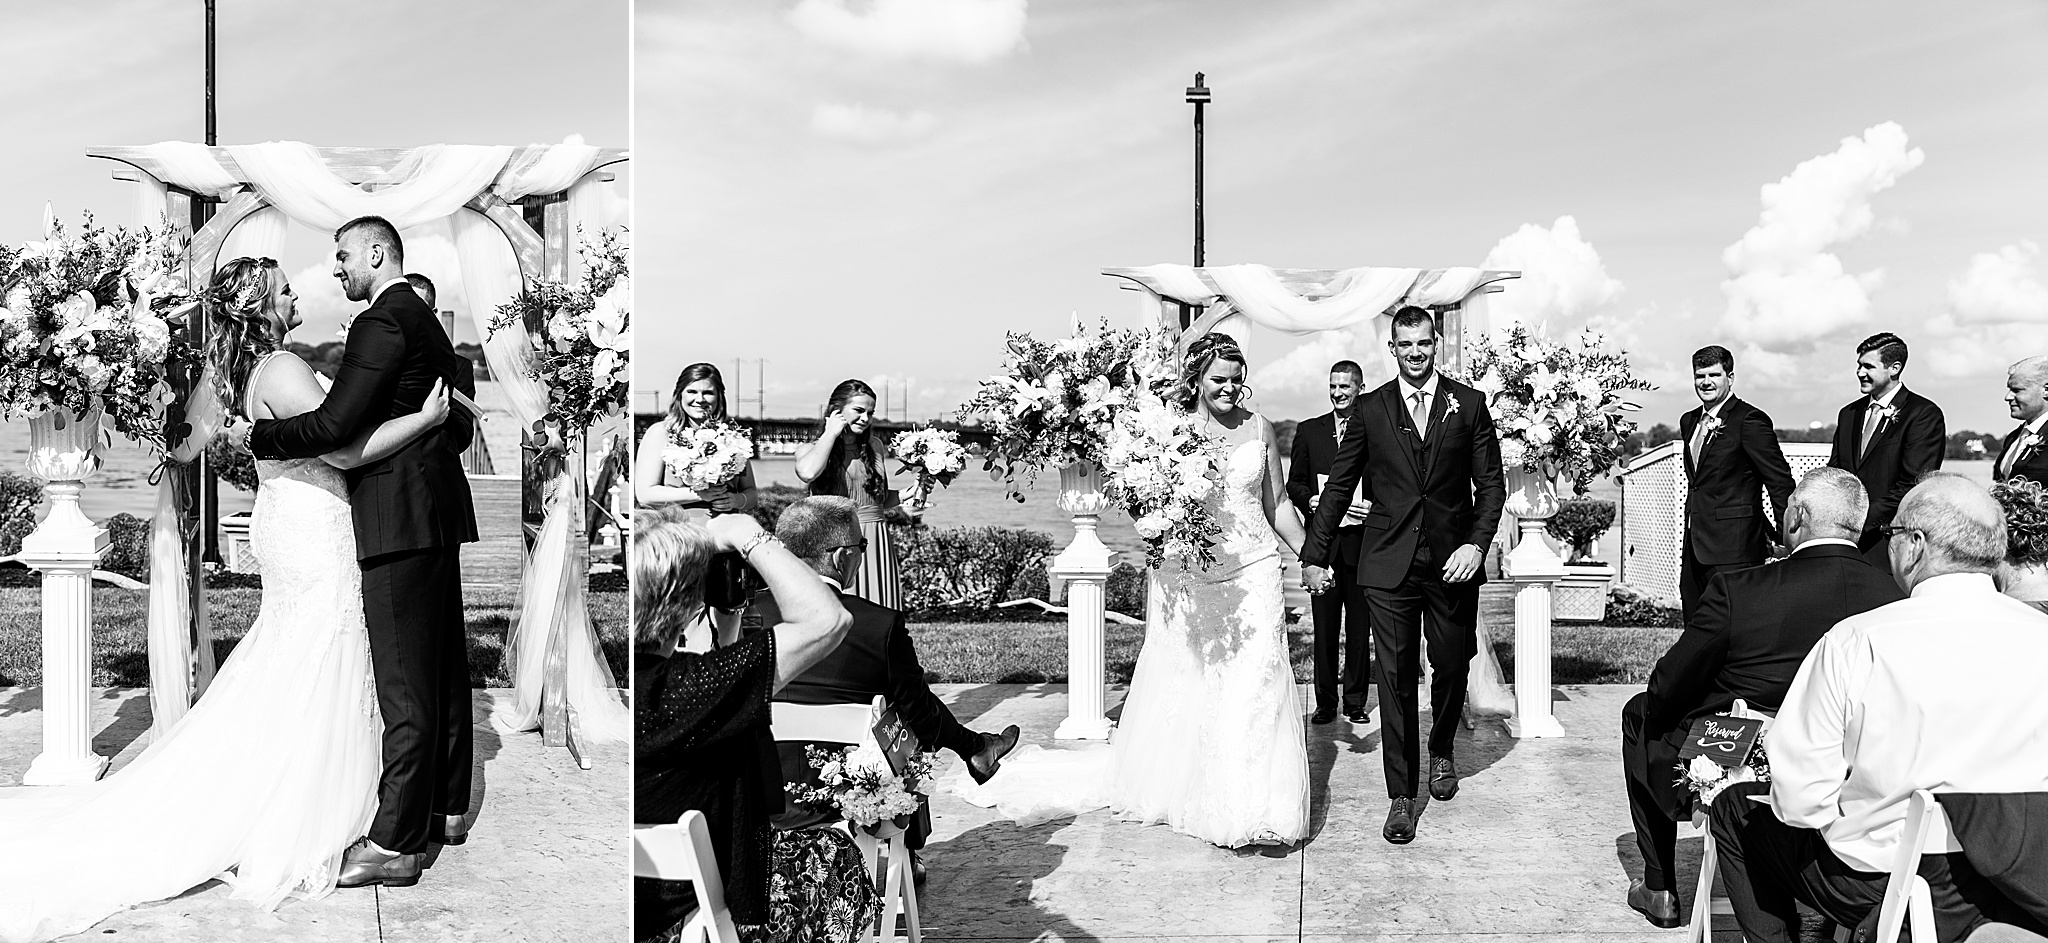 wedding ceremony photographed by Alexandra Mandato Photography in maryland